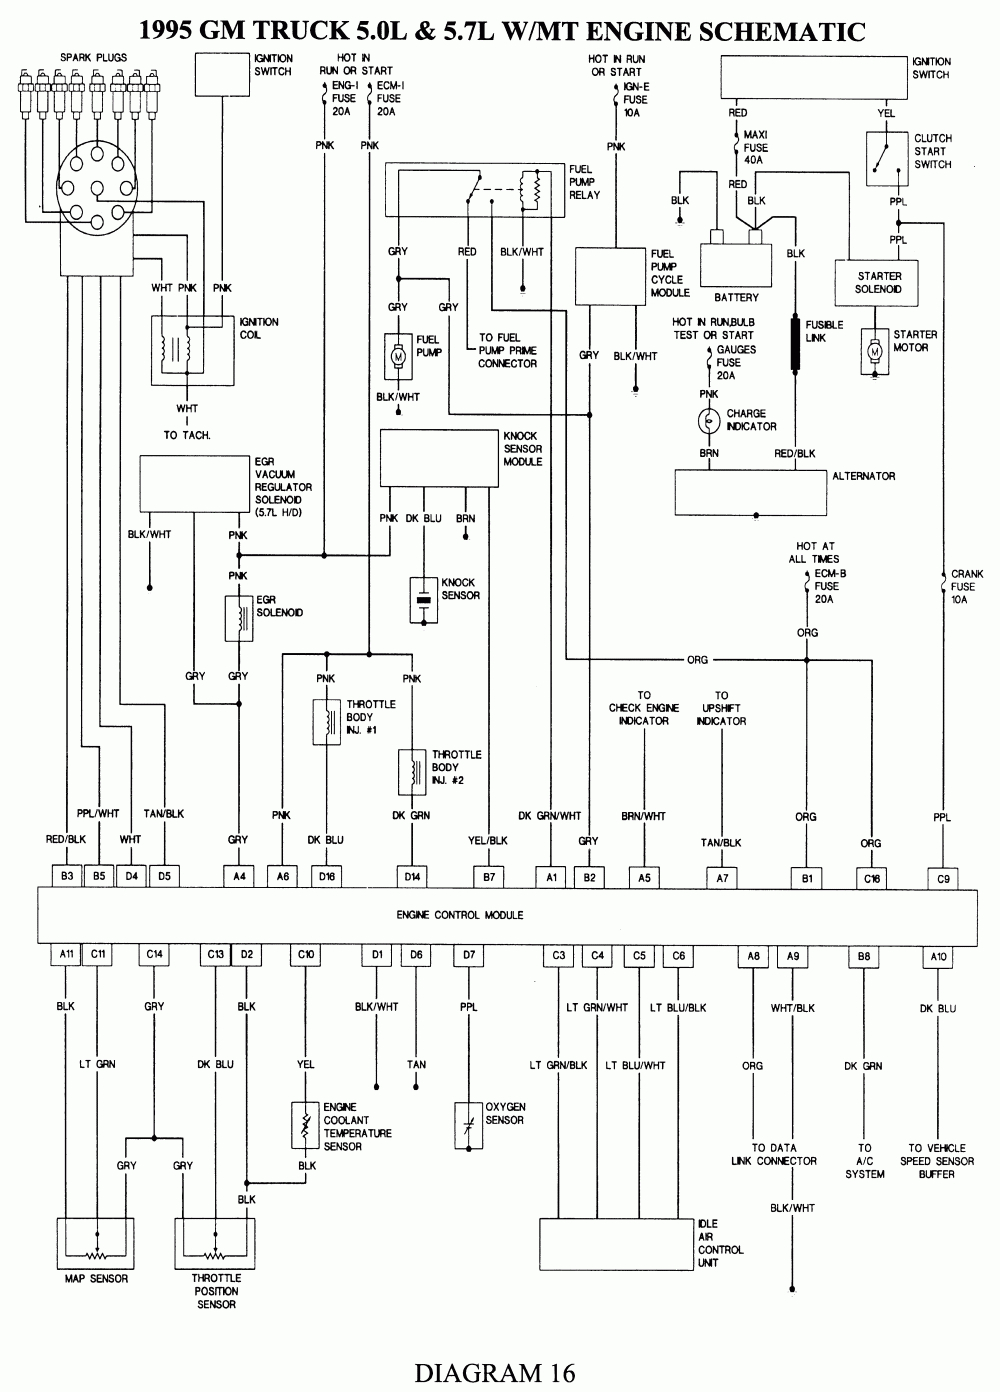 Repair Guides | Wiring Diagrams | Wiring Diagrams | Autozone - 1989 Chevy Truck Fuel Pump Wiring Diagram